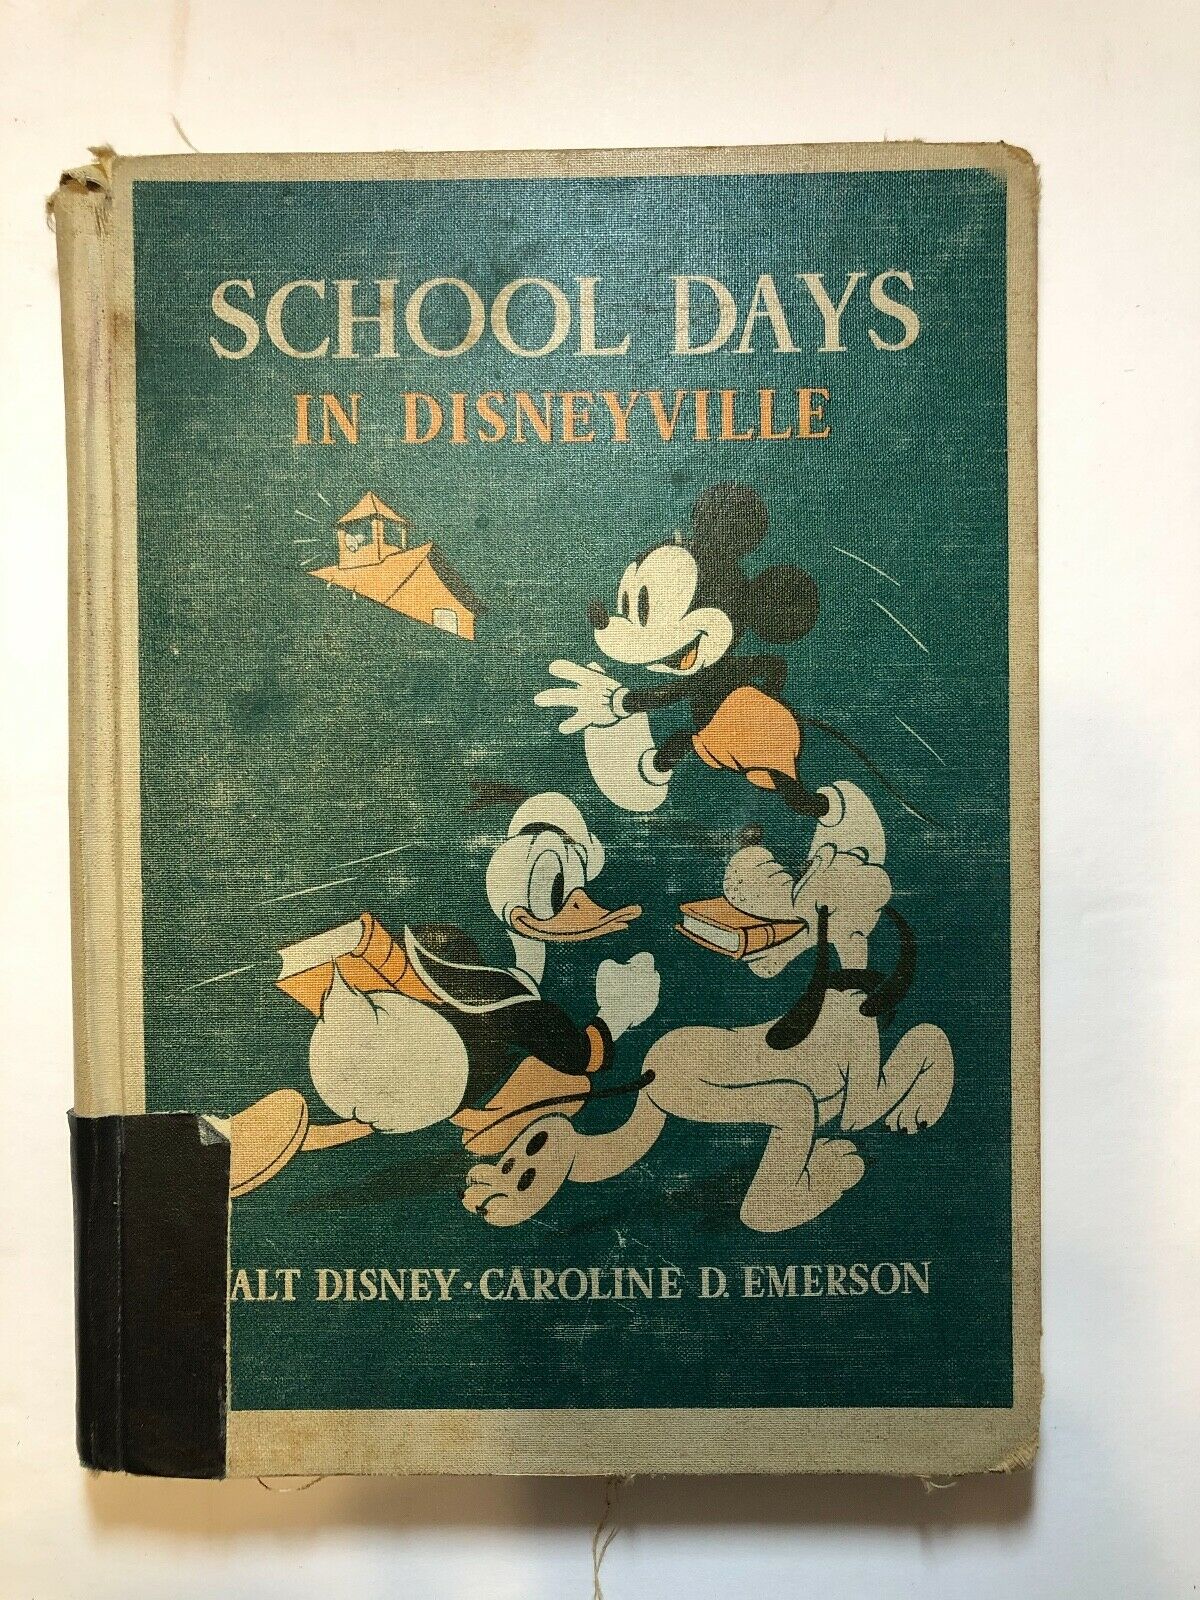 School Days In Disneyville 1939 Walt Disney Caroline Emerson Illustrated